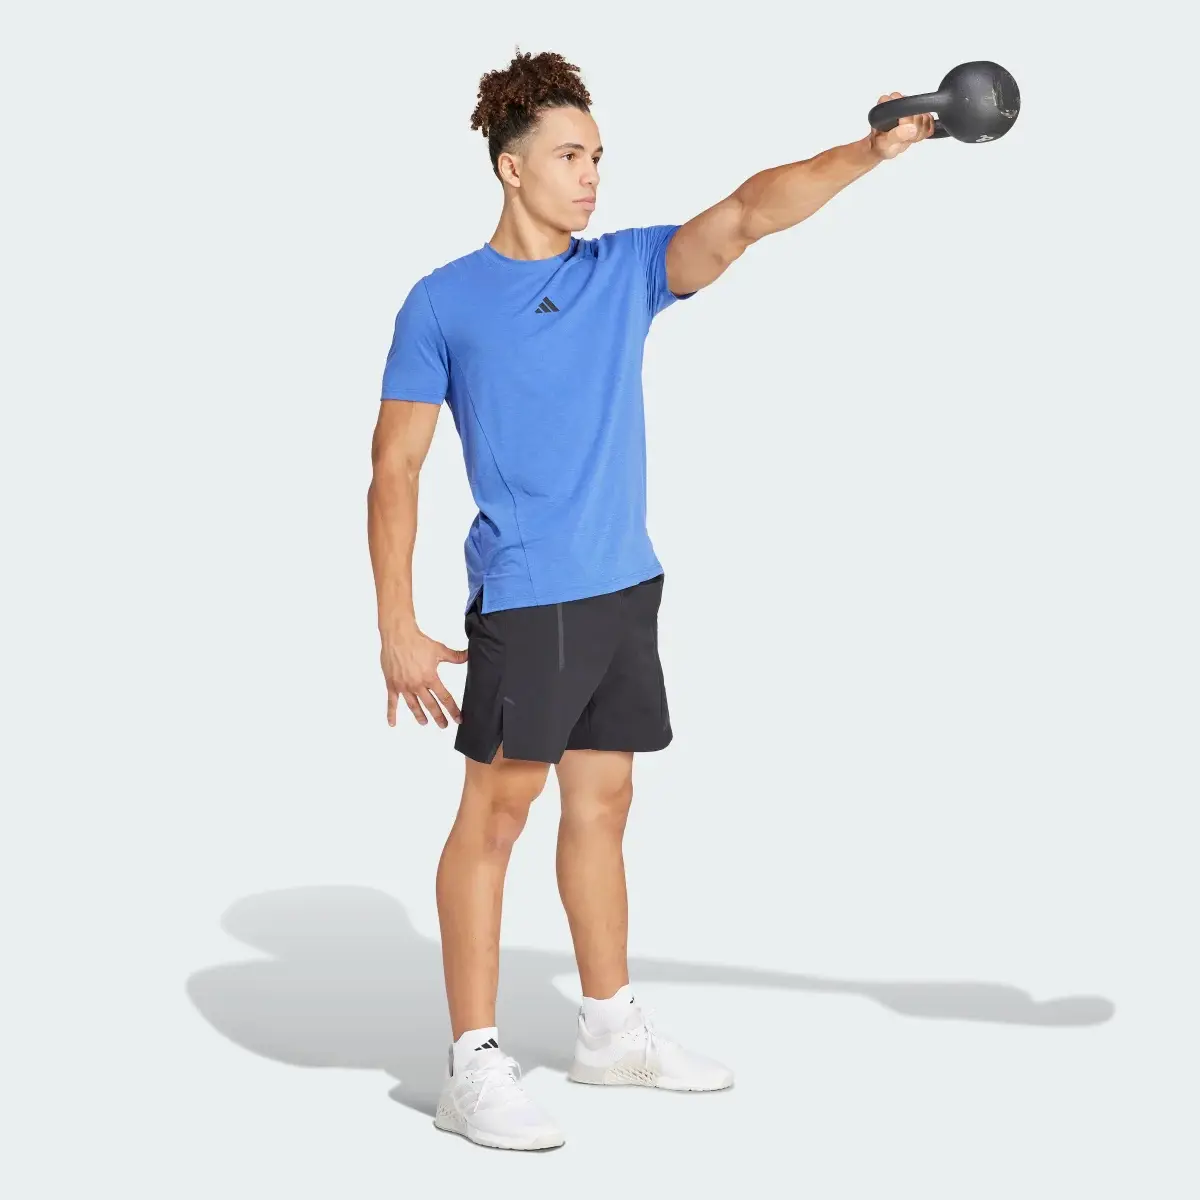 Adidas Designed for Training Workout T-Shirt. 3